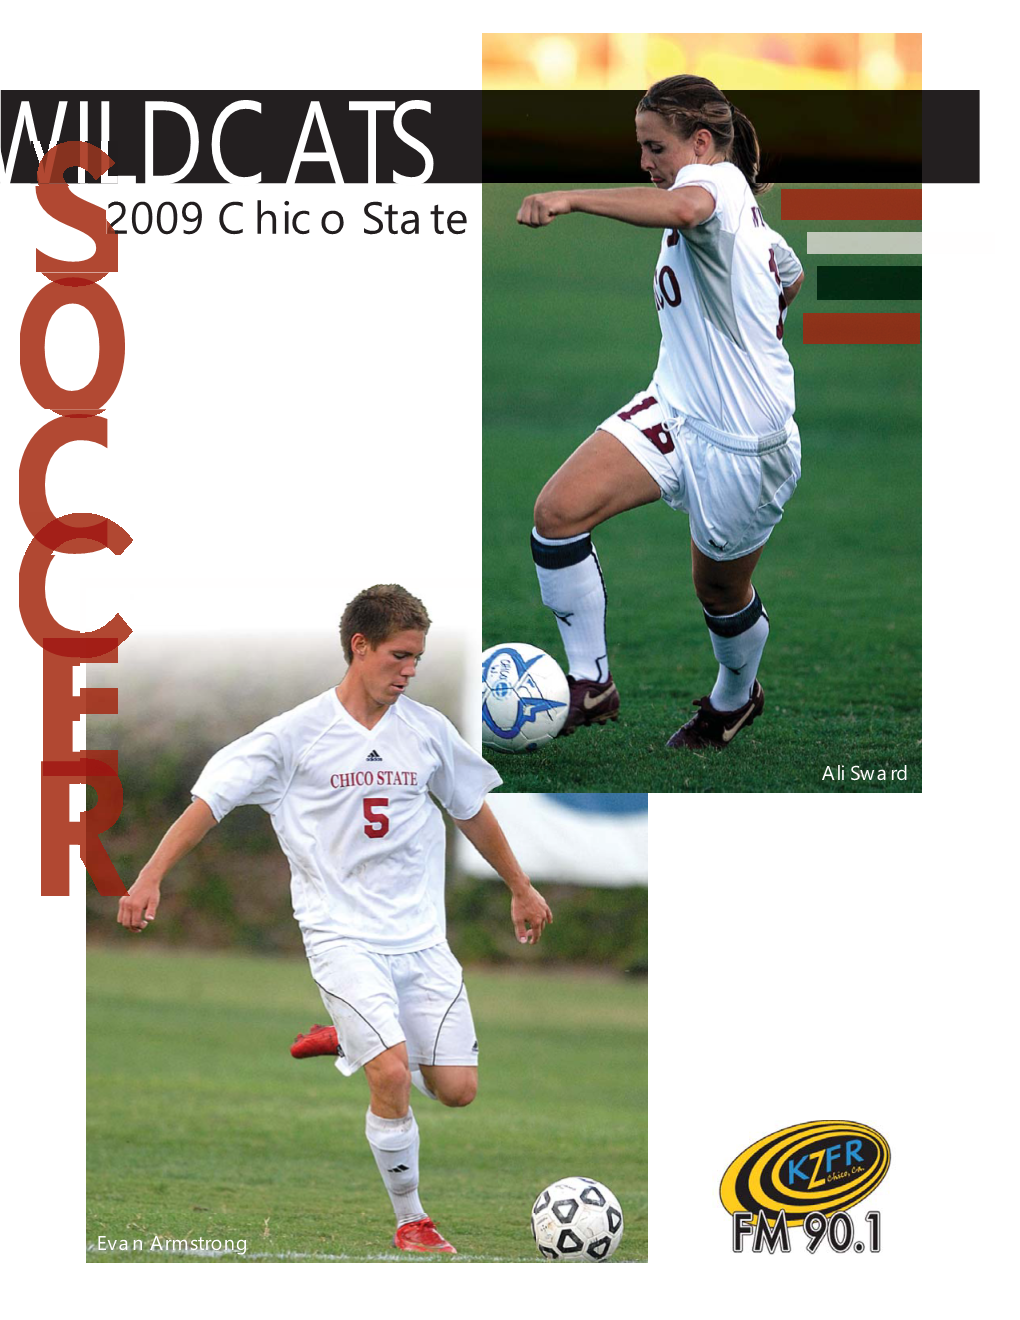 09 Soccer Media Guide.Indd